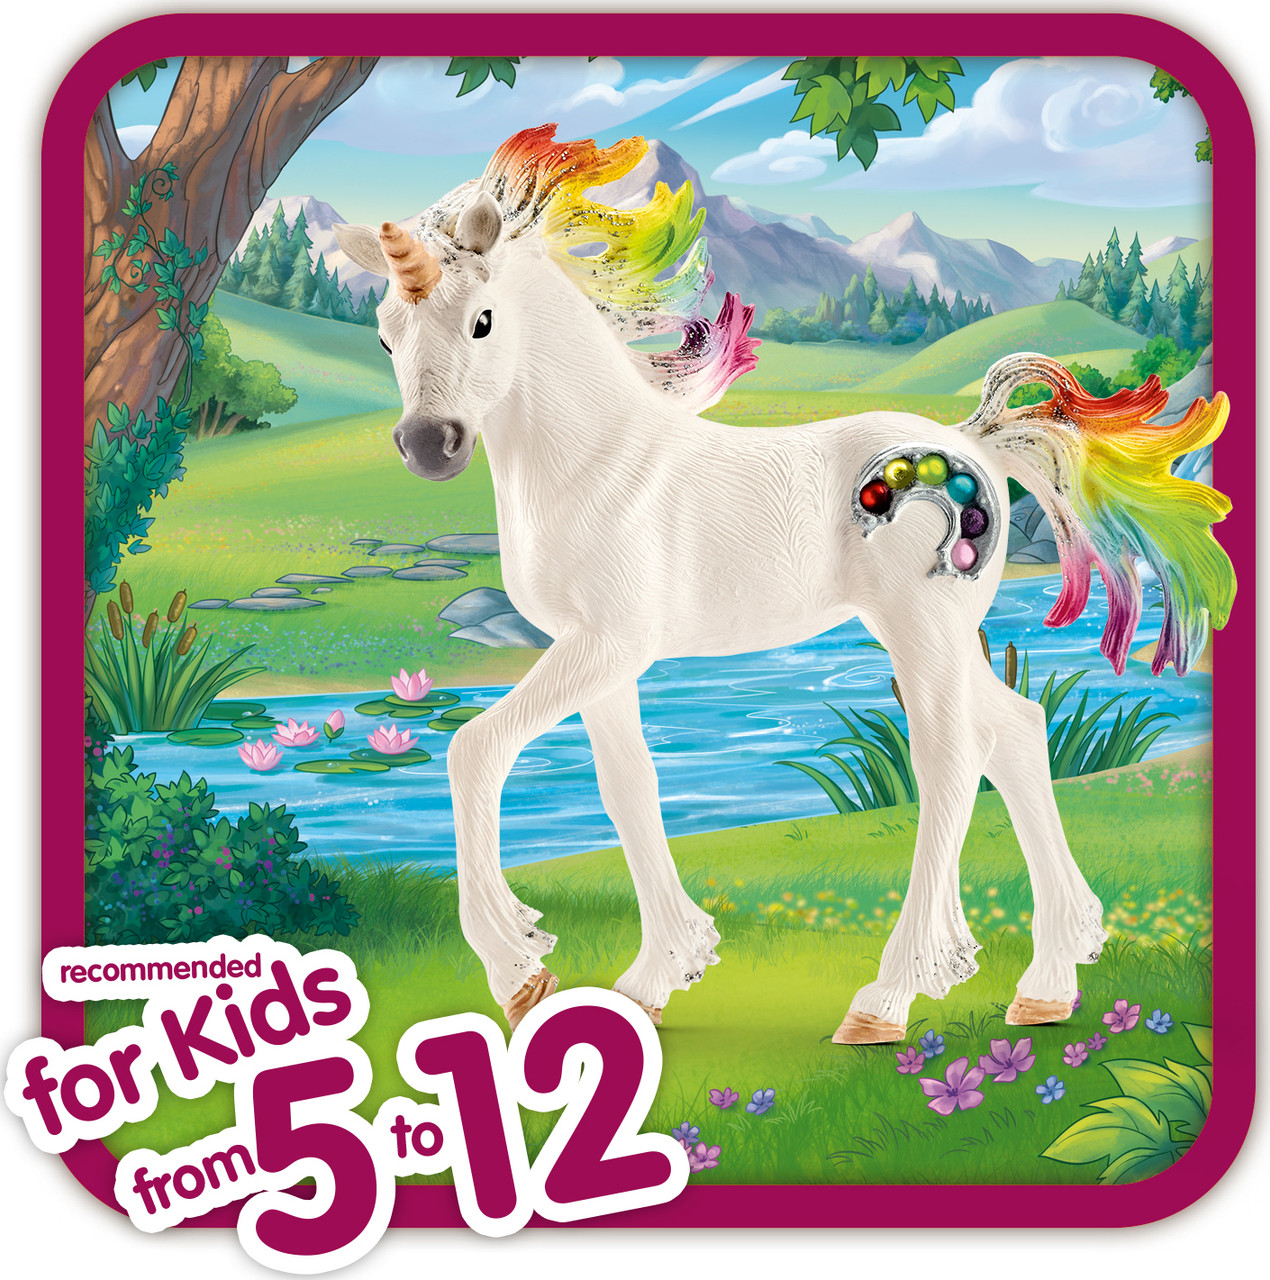 Rainbow Unicorn, Foal 3